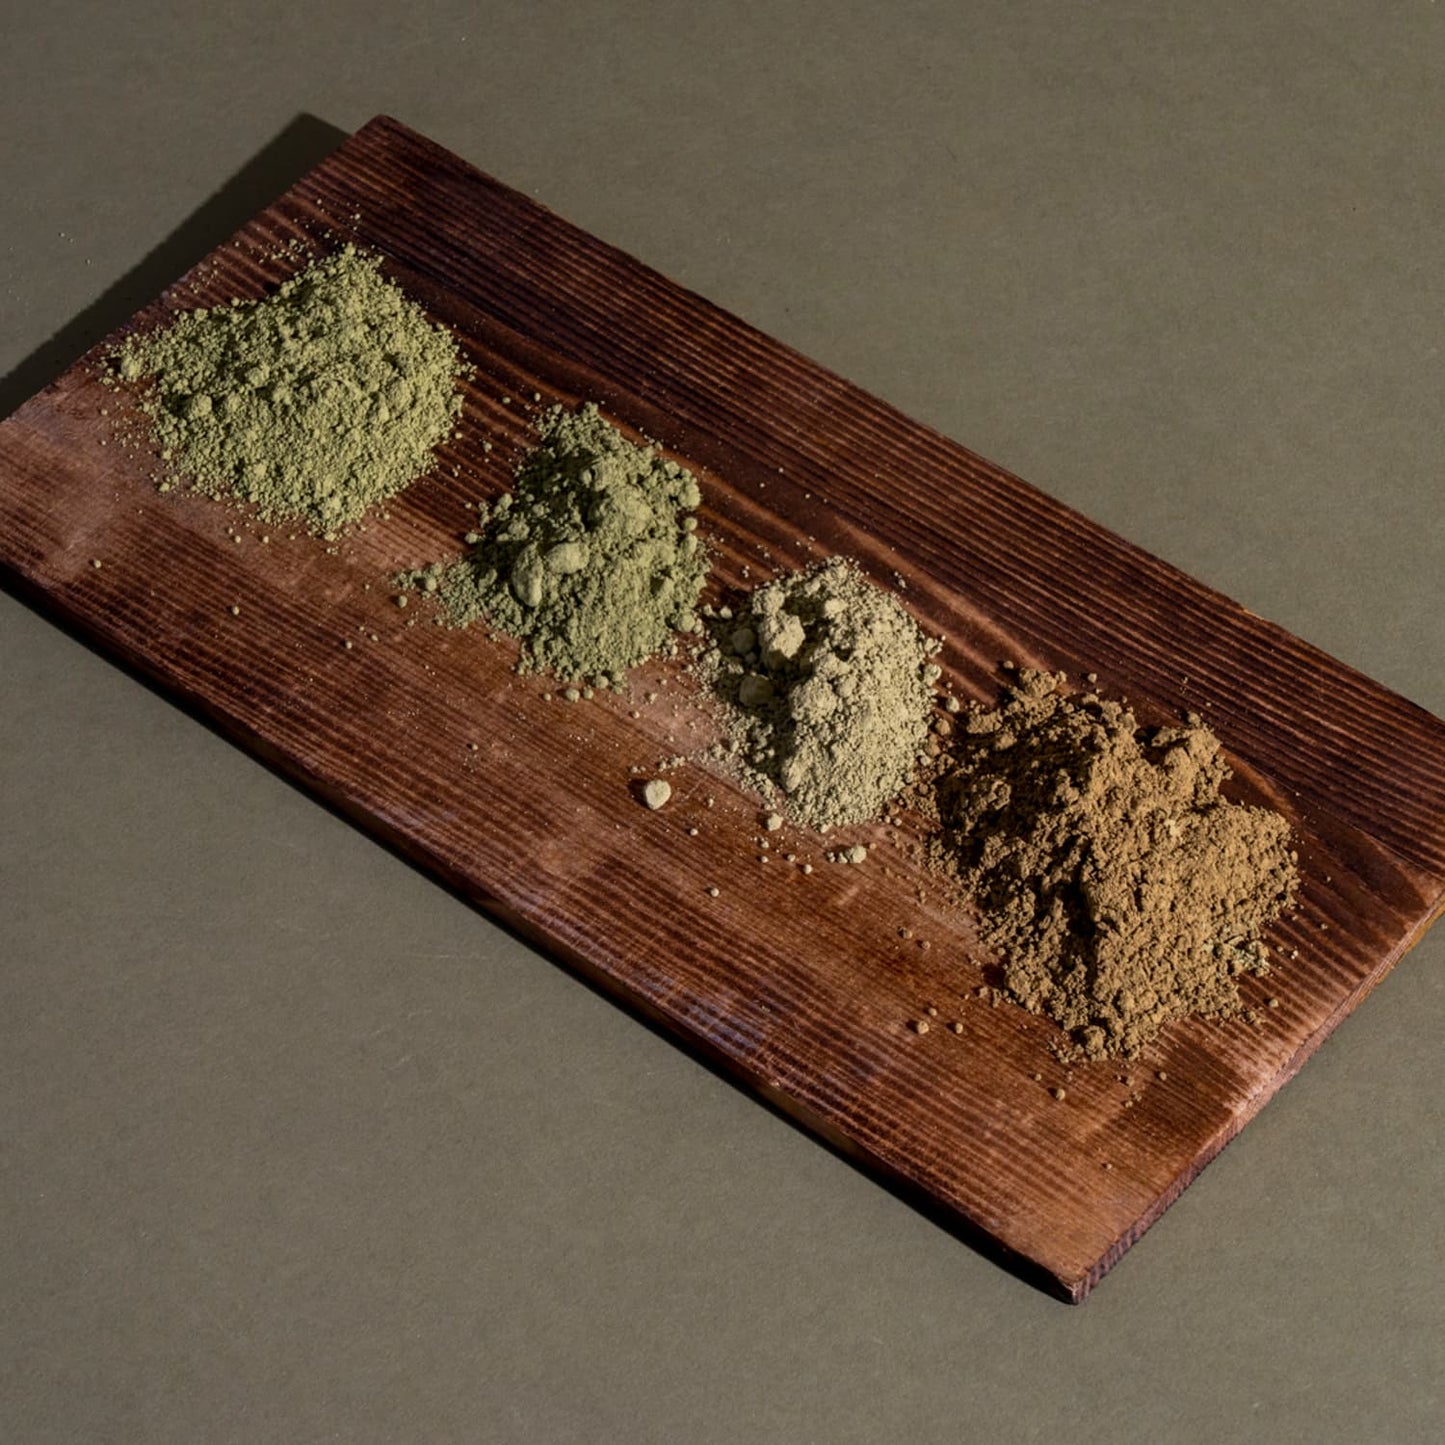 Four piles of kratom powder on a wooden board